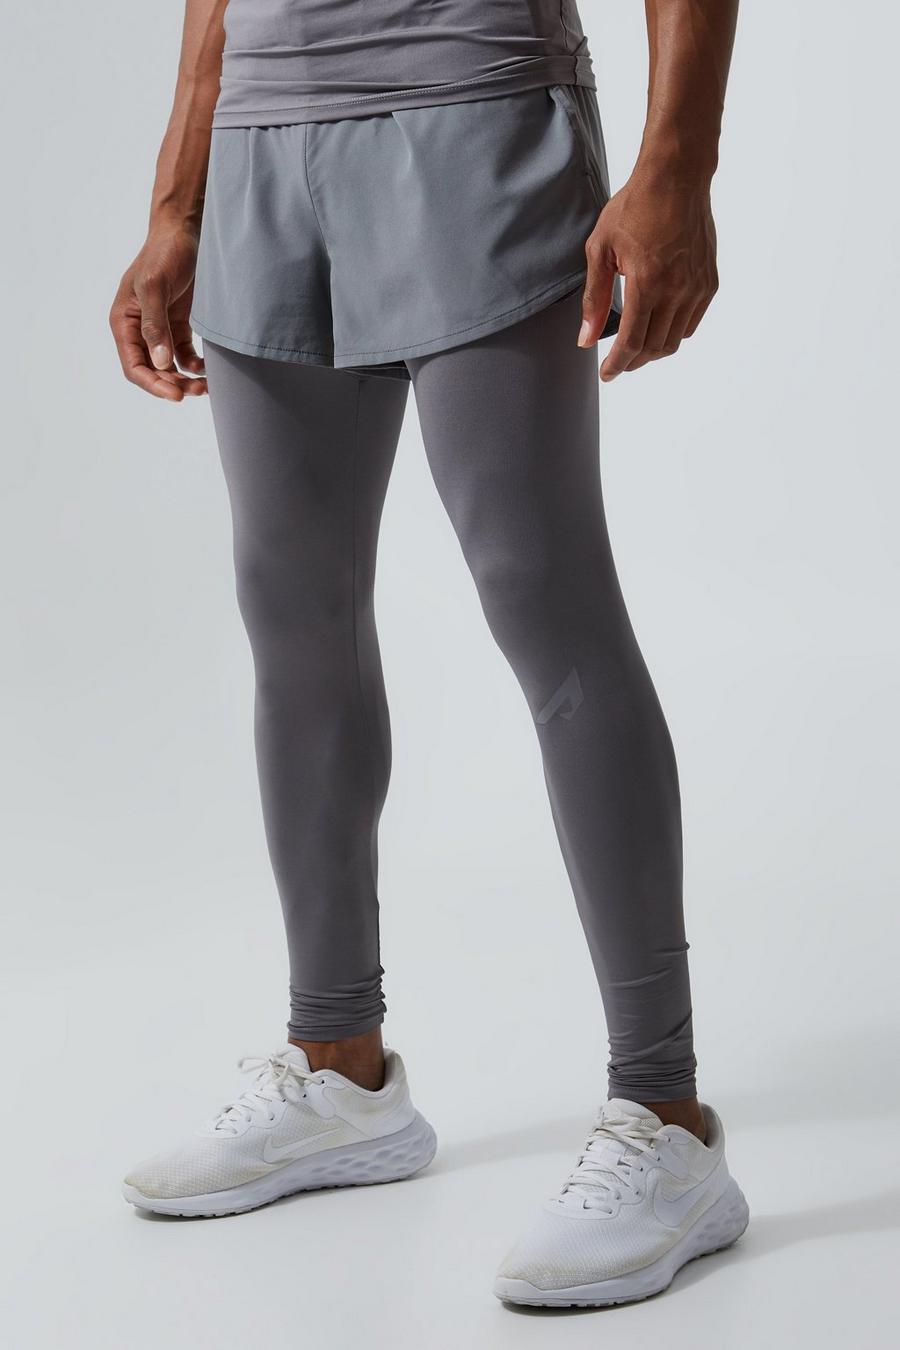 Charcoal grey Active Skinny Fit Seamless Runner Legging